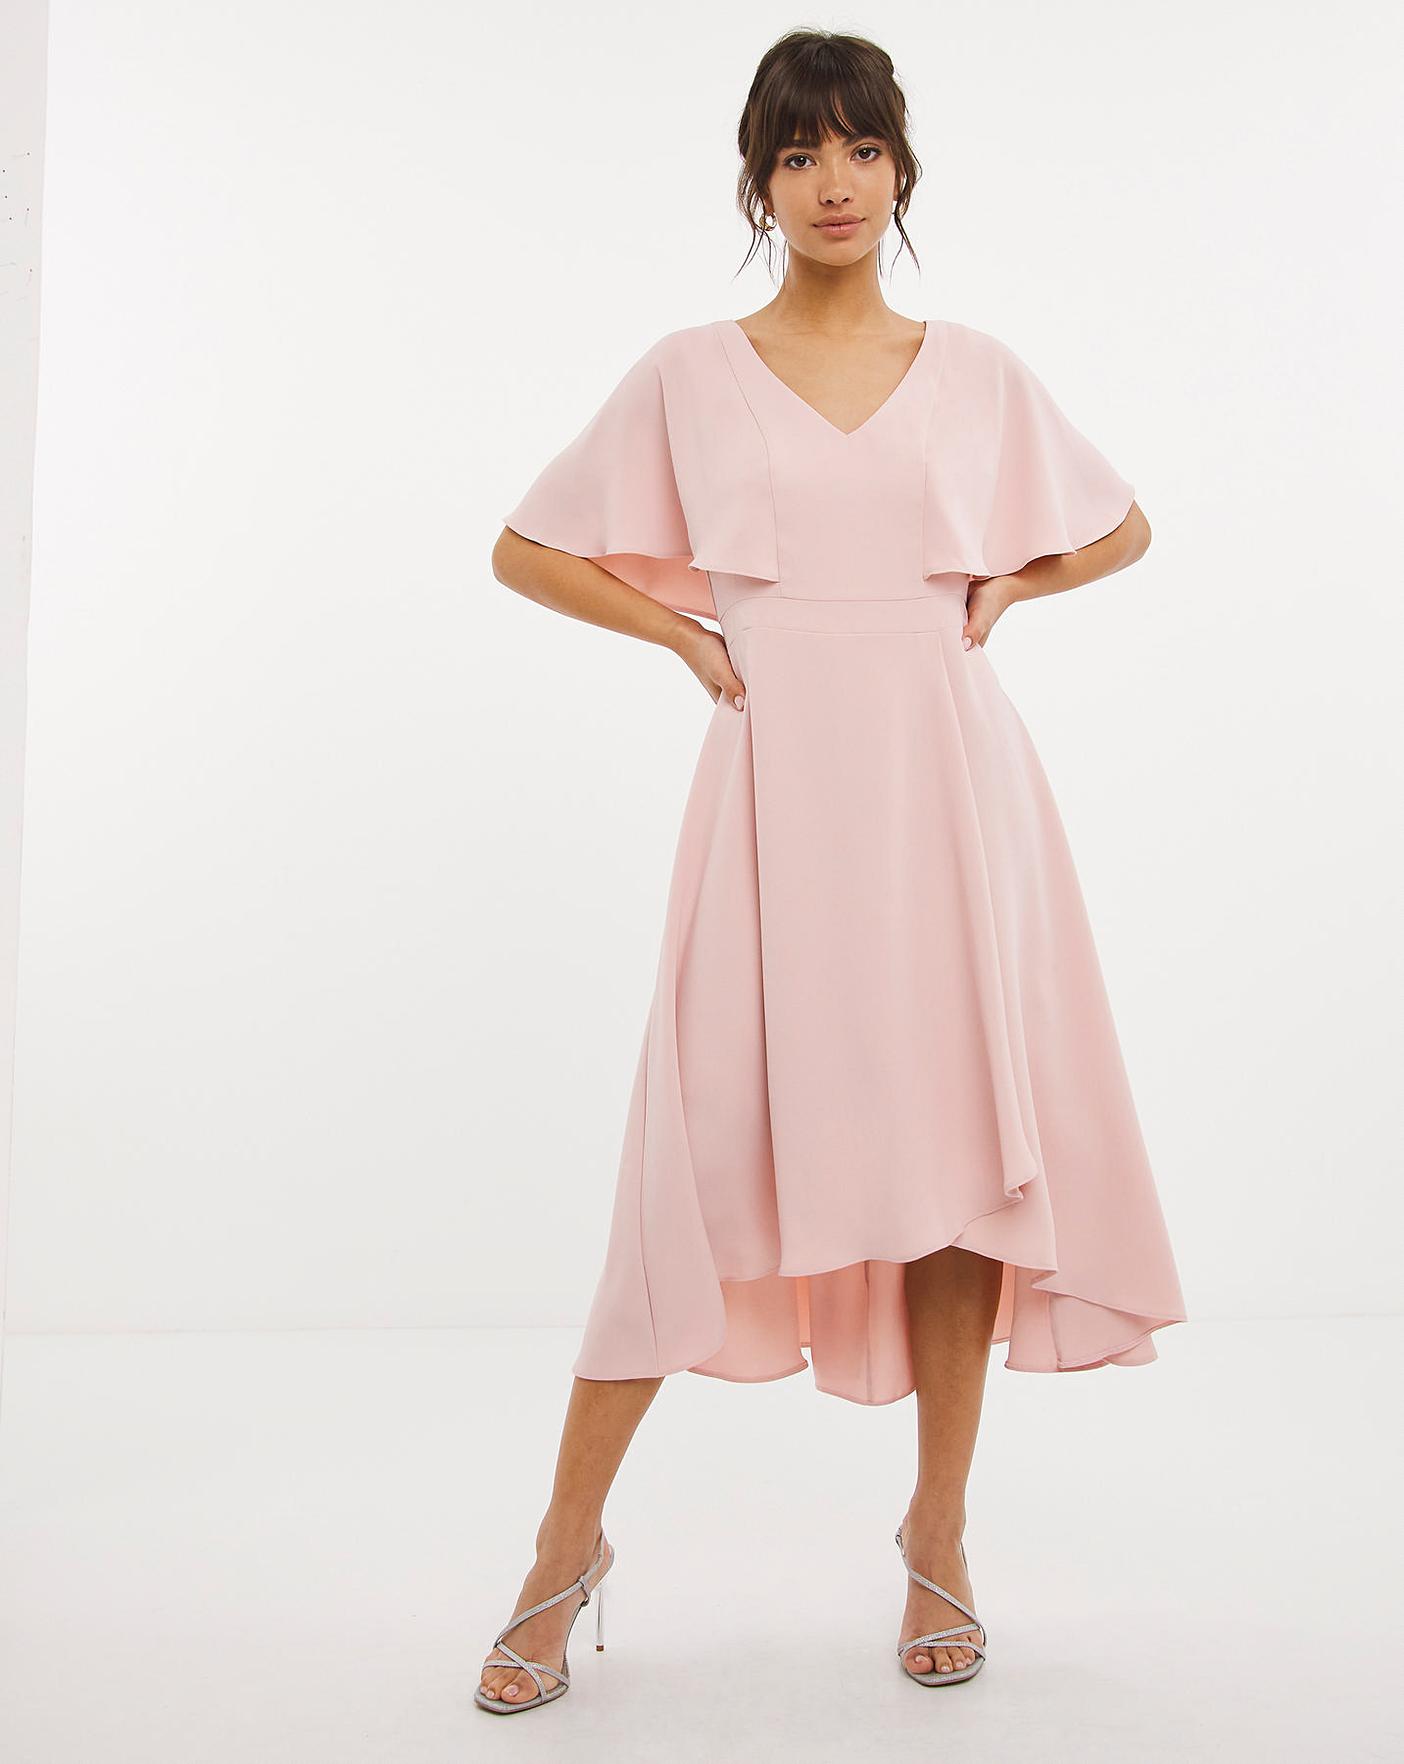 Joanna Hope Wrap Skirt Midi Dress | J D Williams